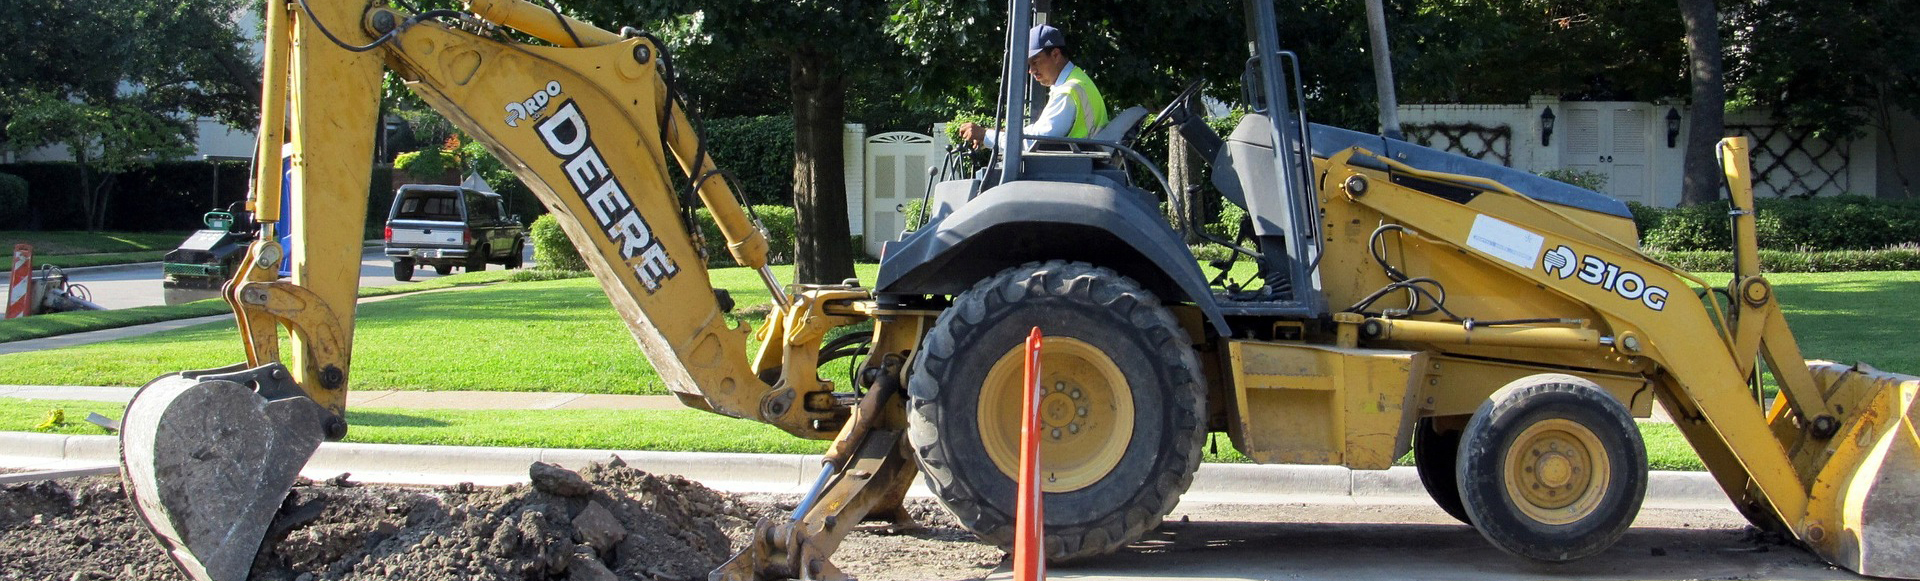 Broken Sewer Line Repair a Relief to Homeowner